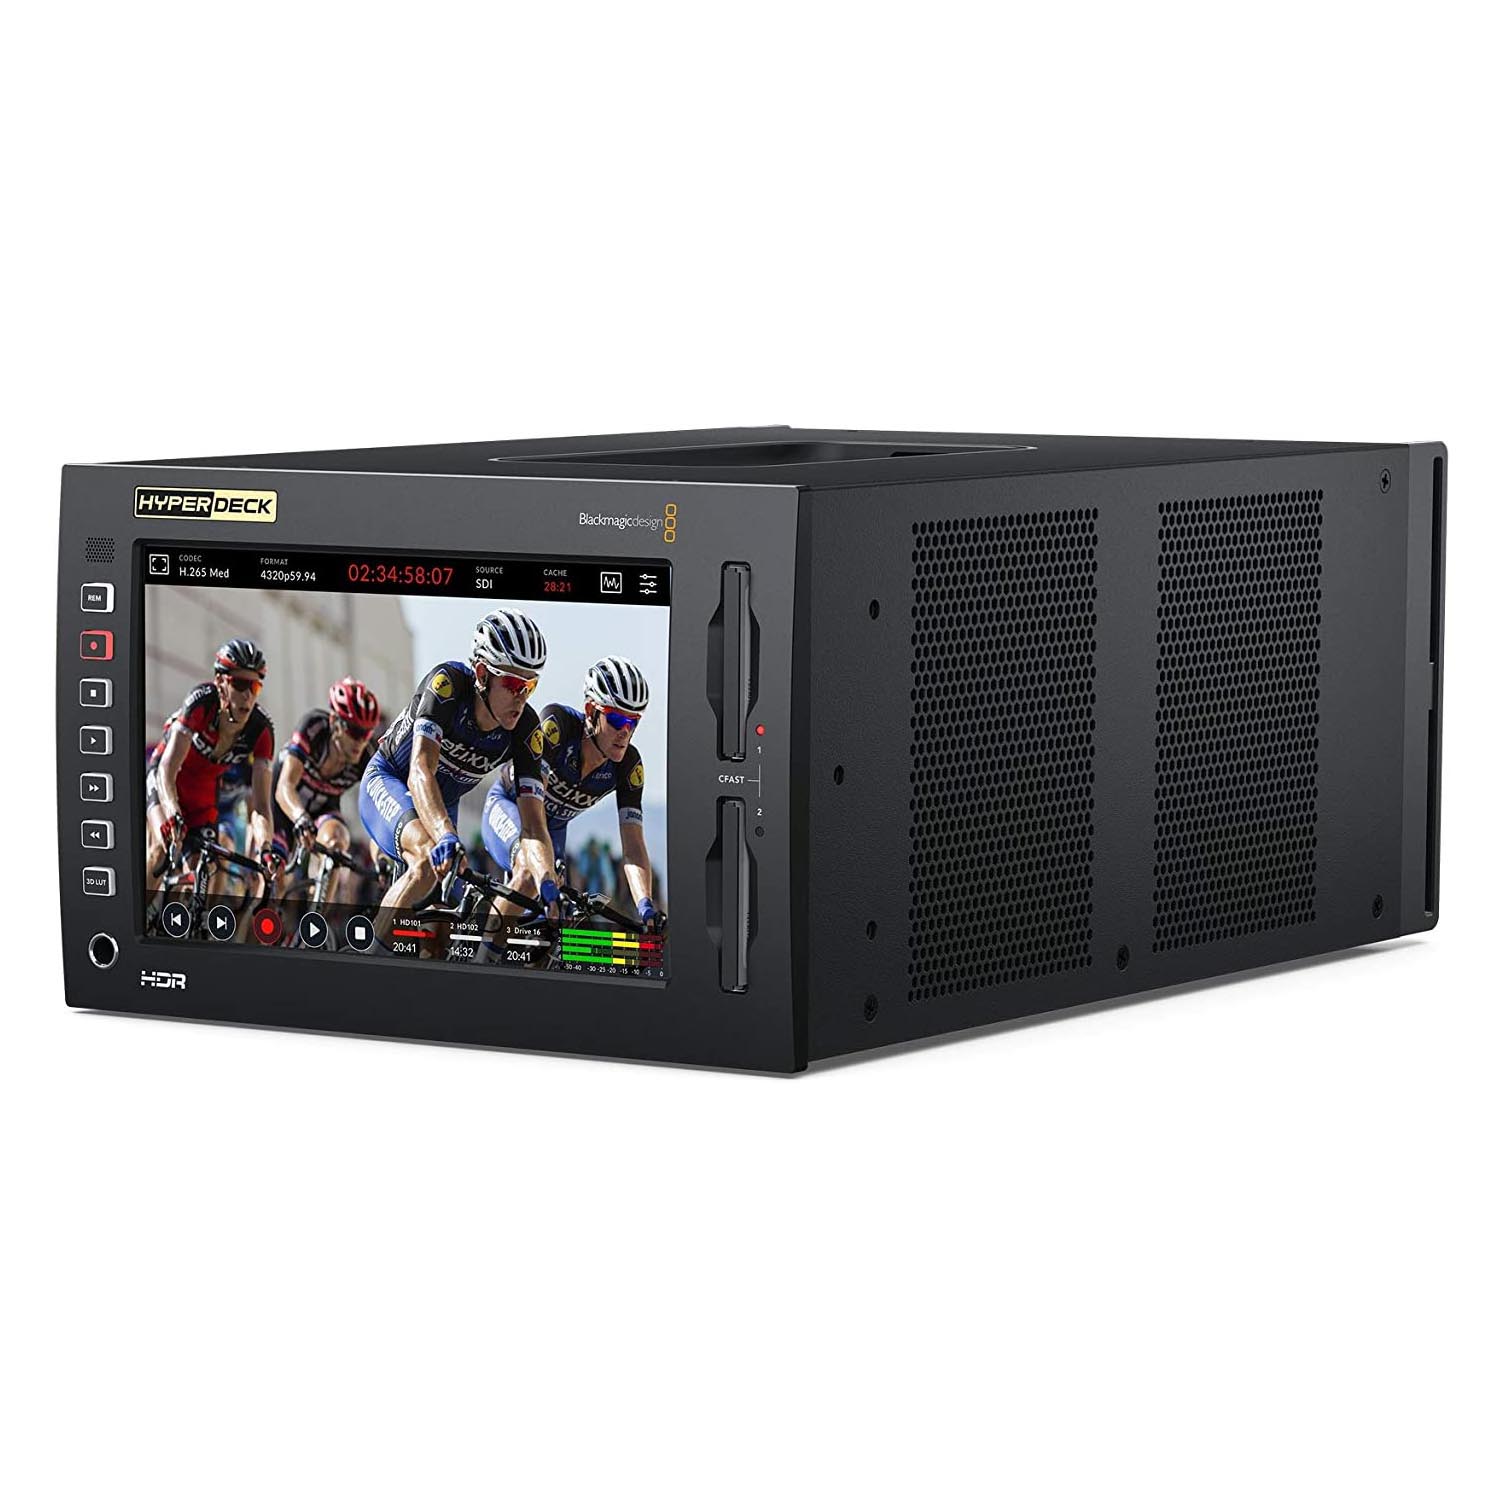 Рекордер Blackmagic Design HyperDeck Extreme 8K HDR, черный цена и фото